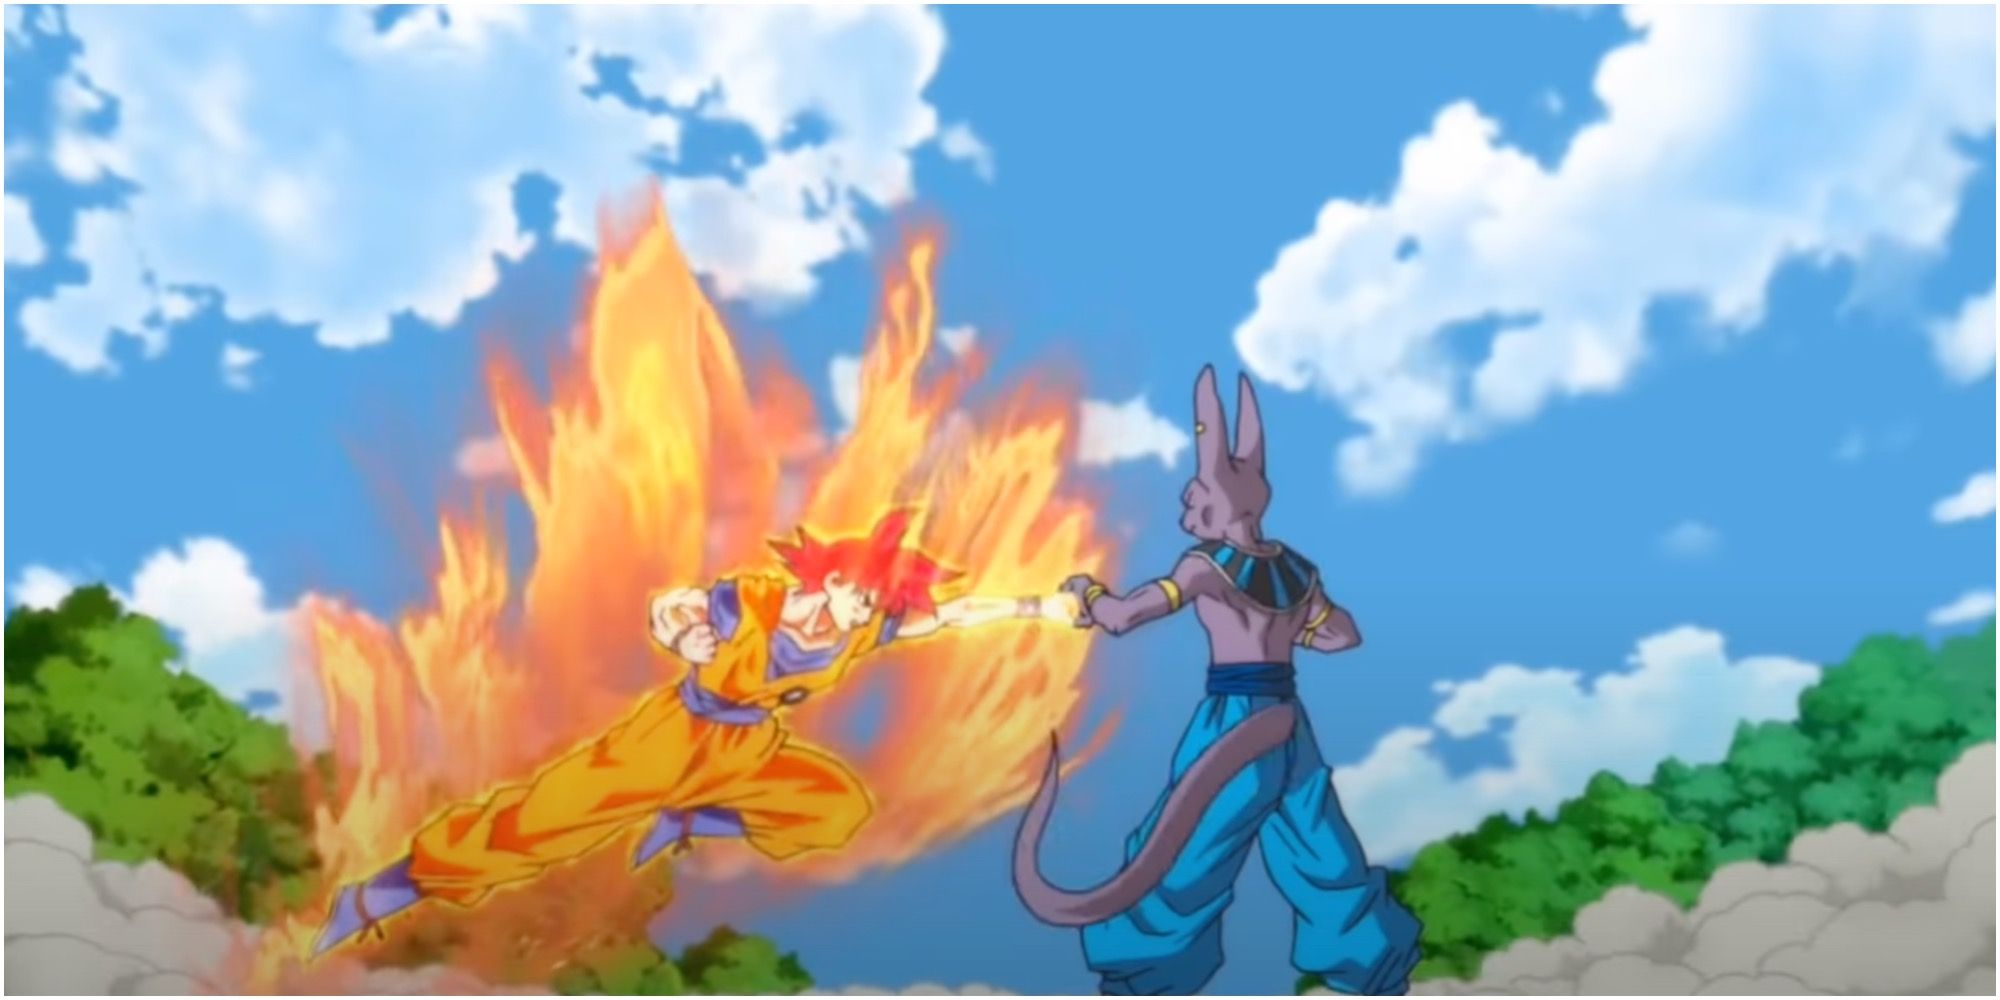 Super Saiyan God Goku vs Beerus